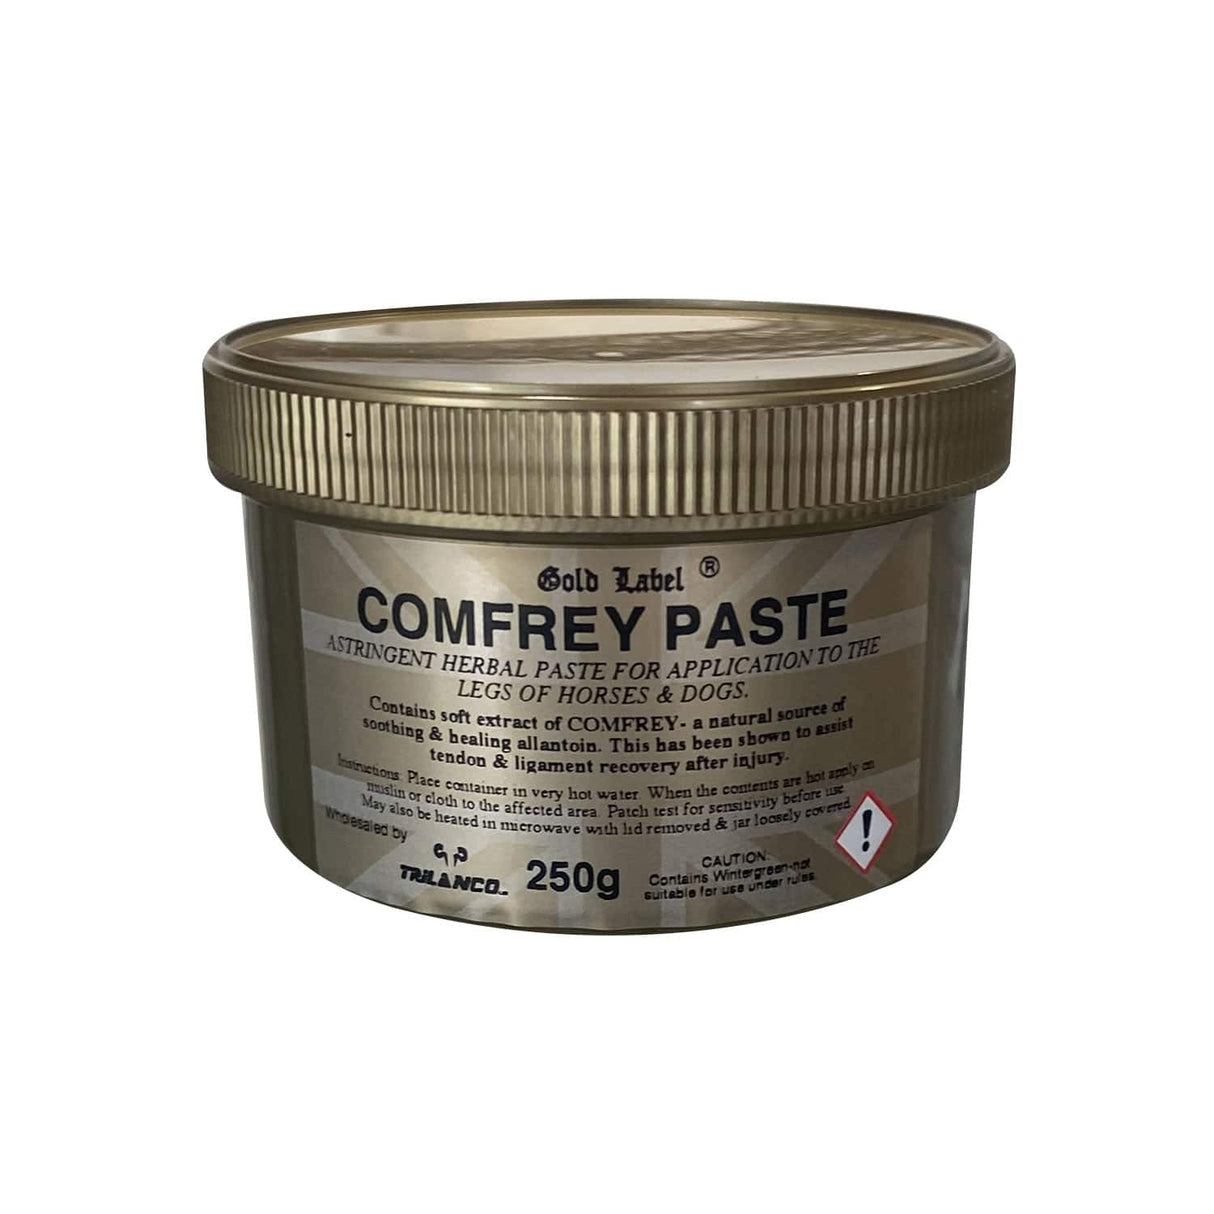 Gold Label Comfrey Paste Veterinary Barnstaple Equestrian Supplies